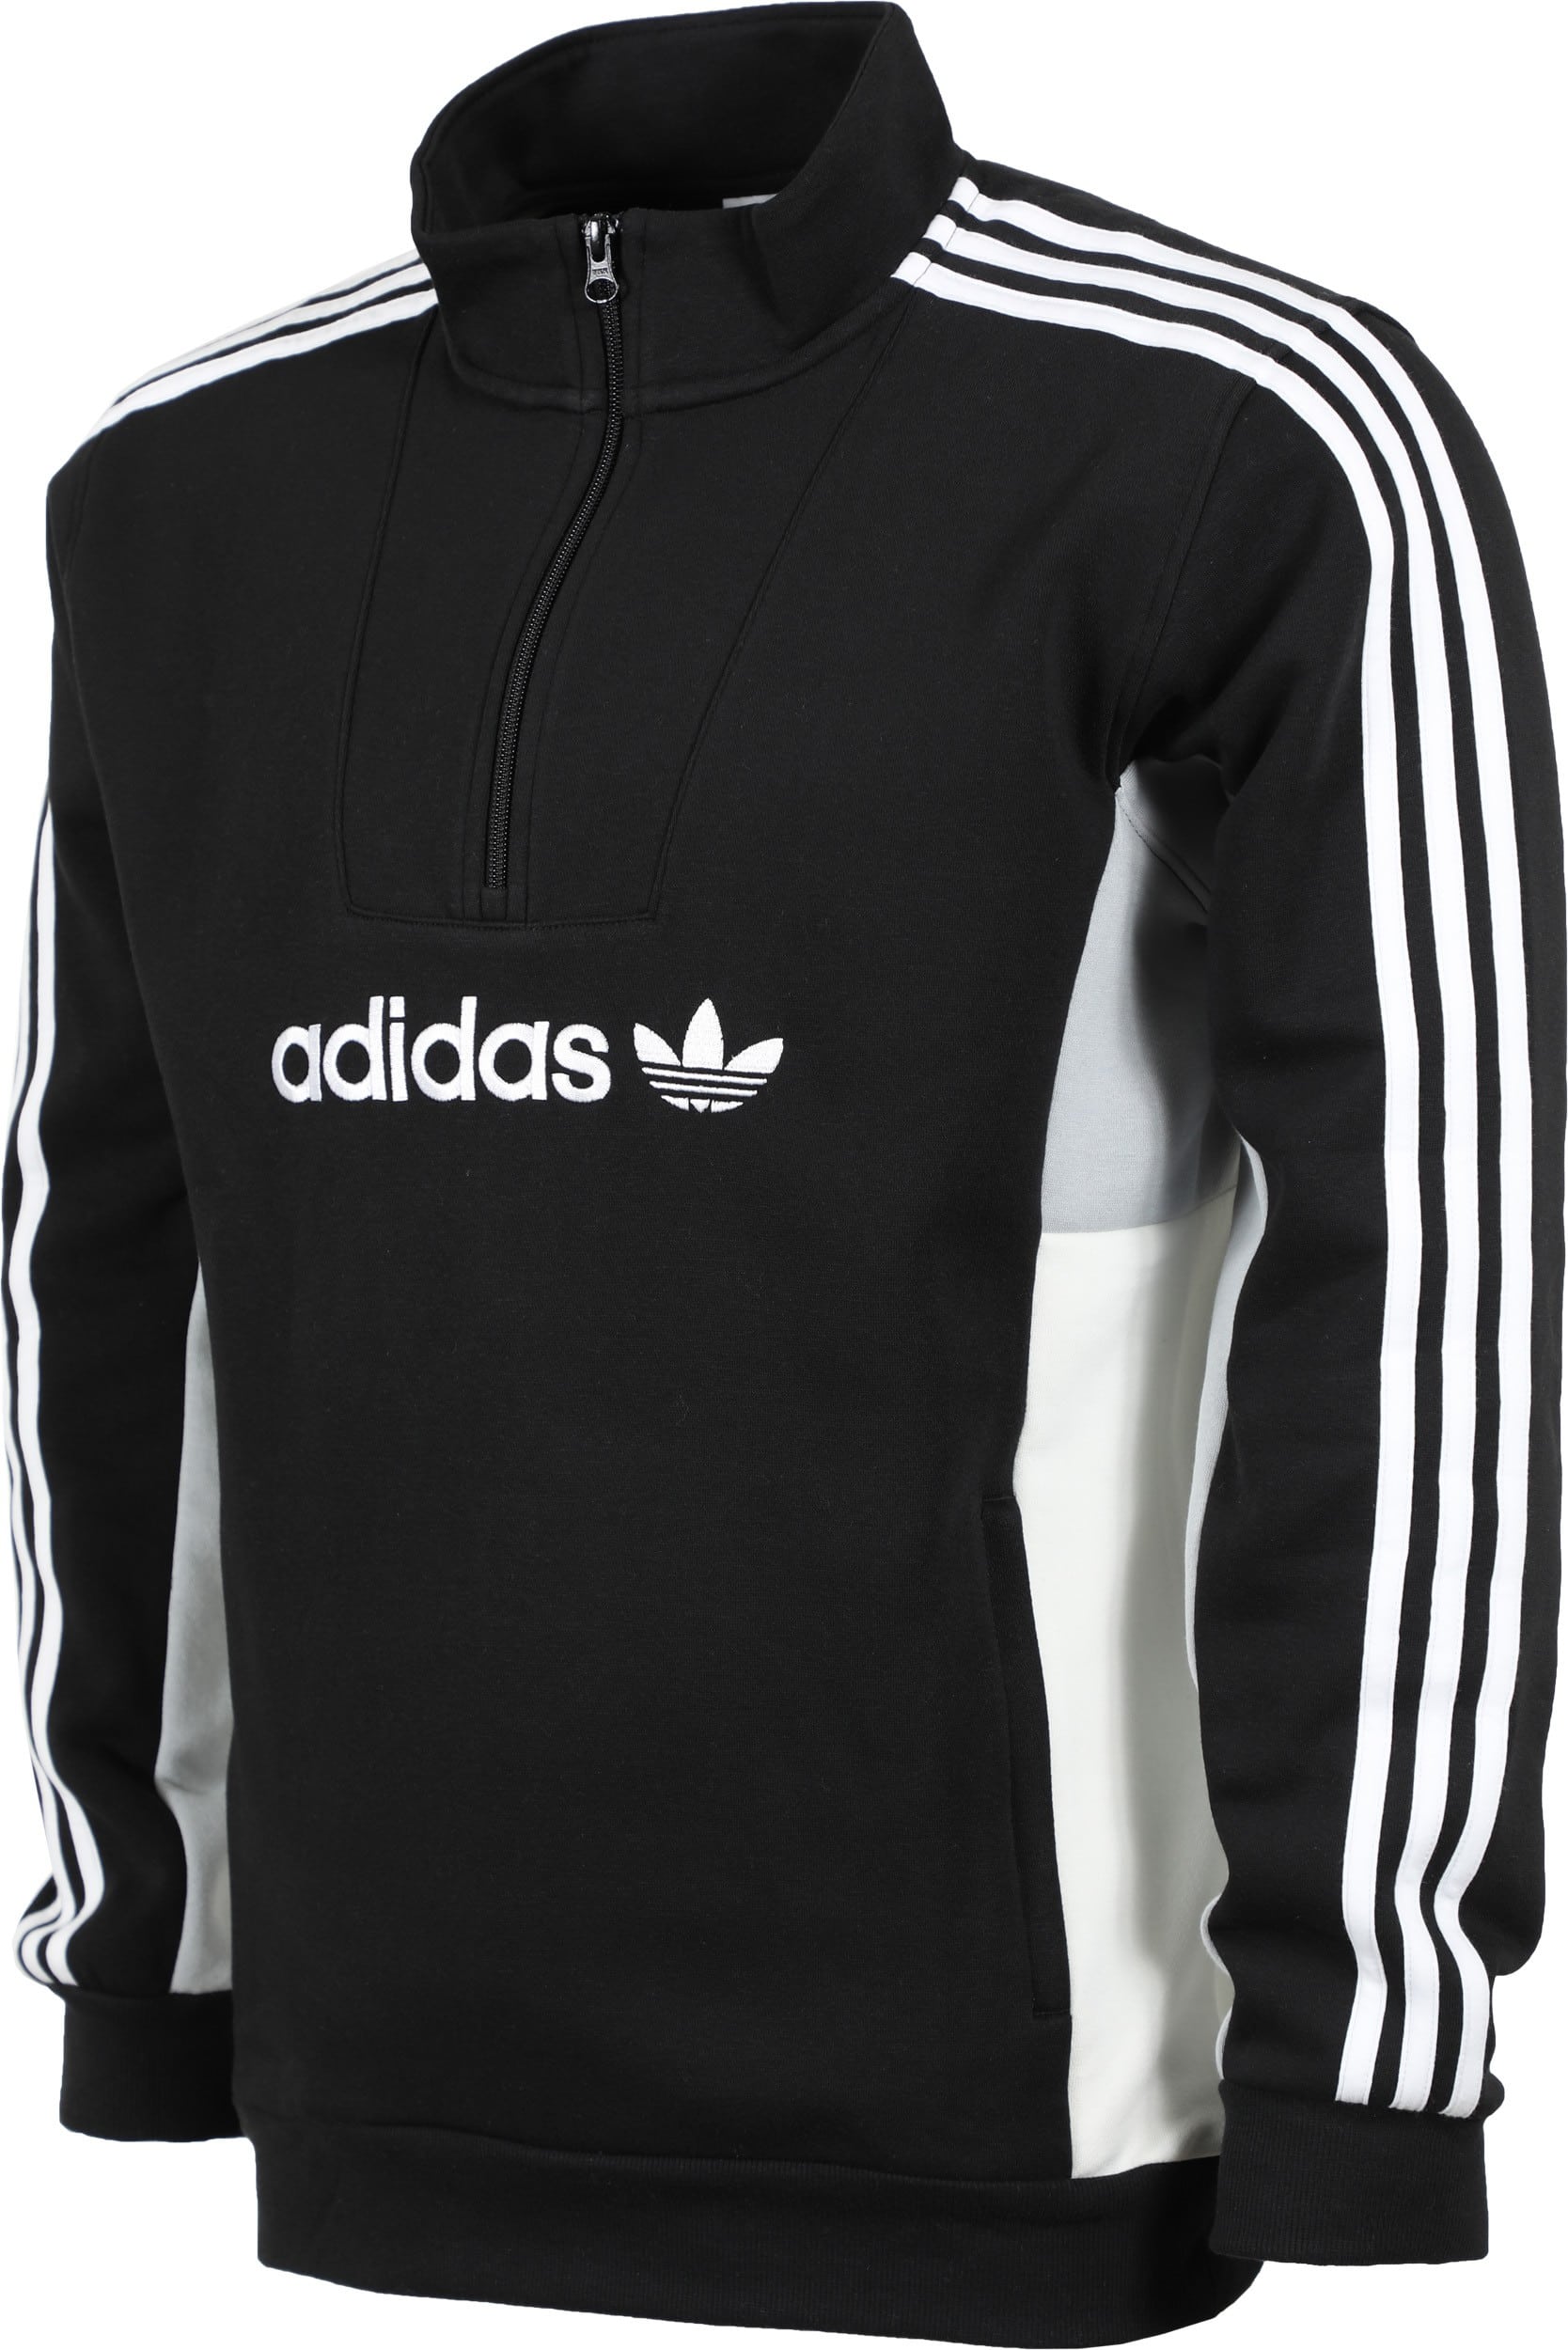 Adidas Mod 1/4 Zip Jacket - black/clear onix/white/off white | Tactics